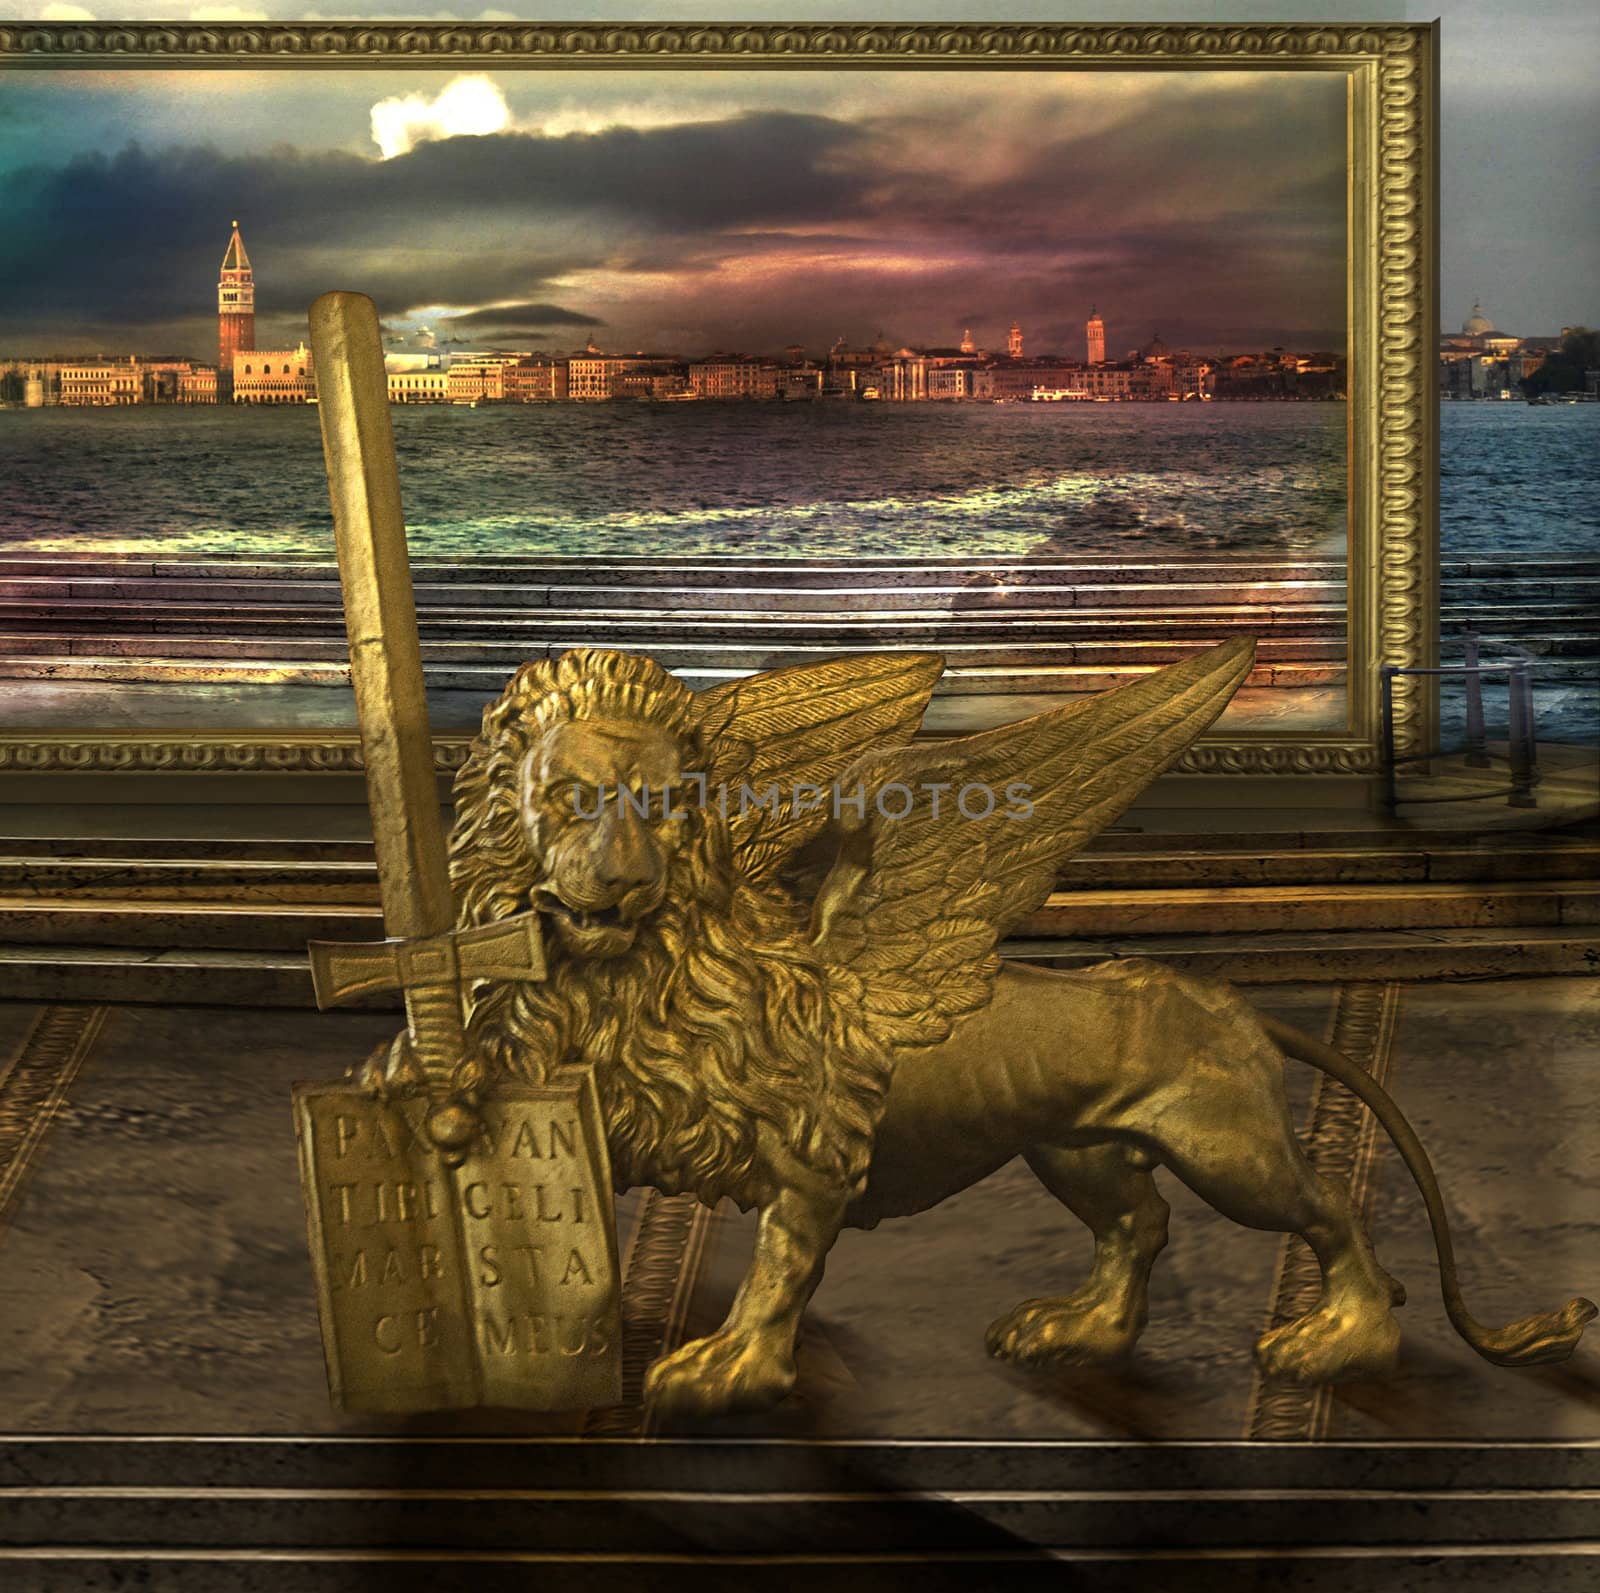 The golden Leo in alternative earth by sattva